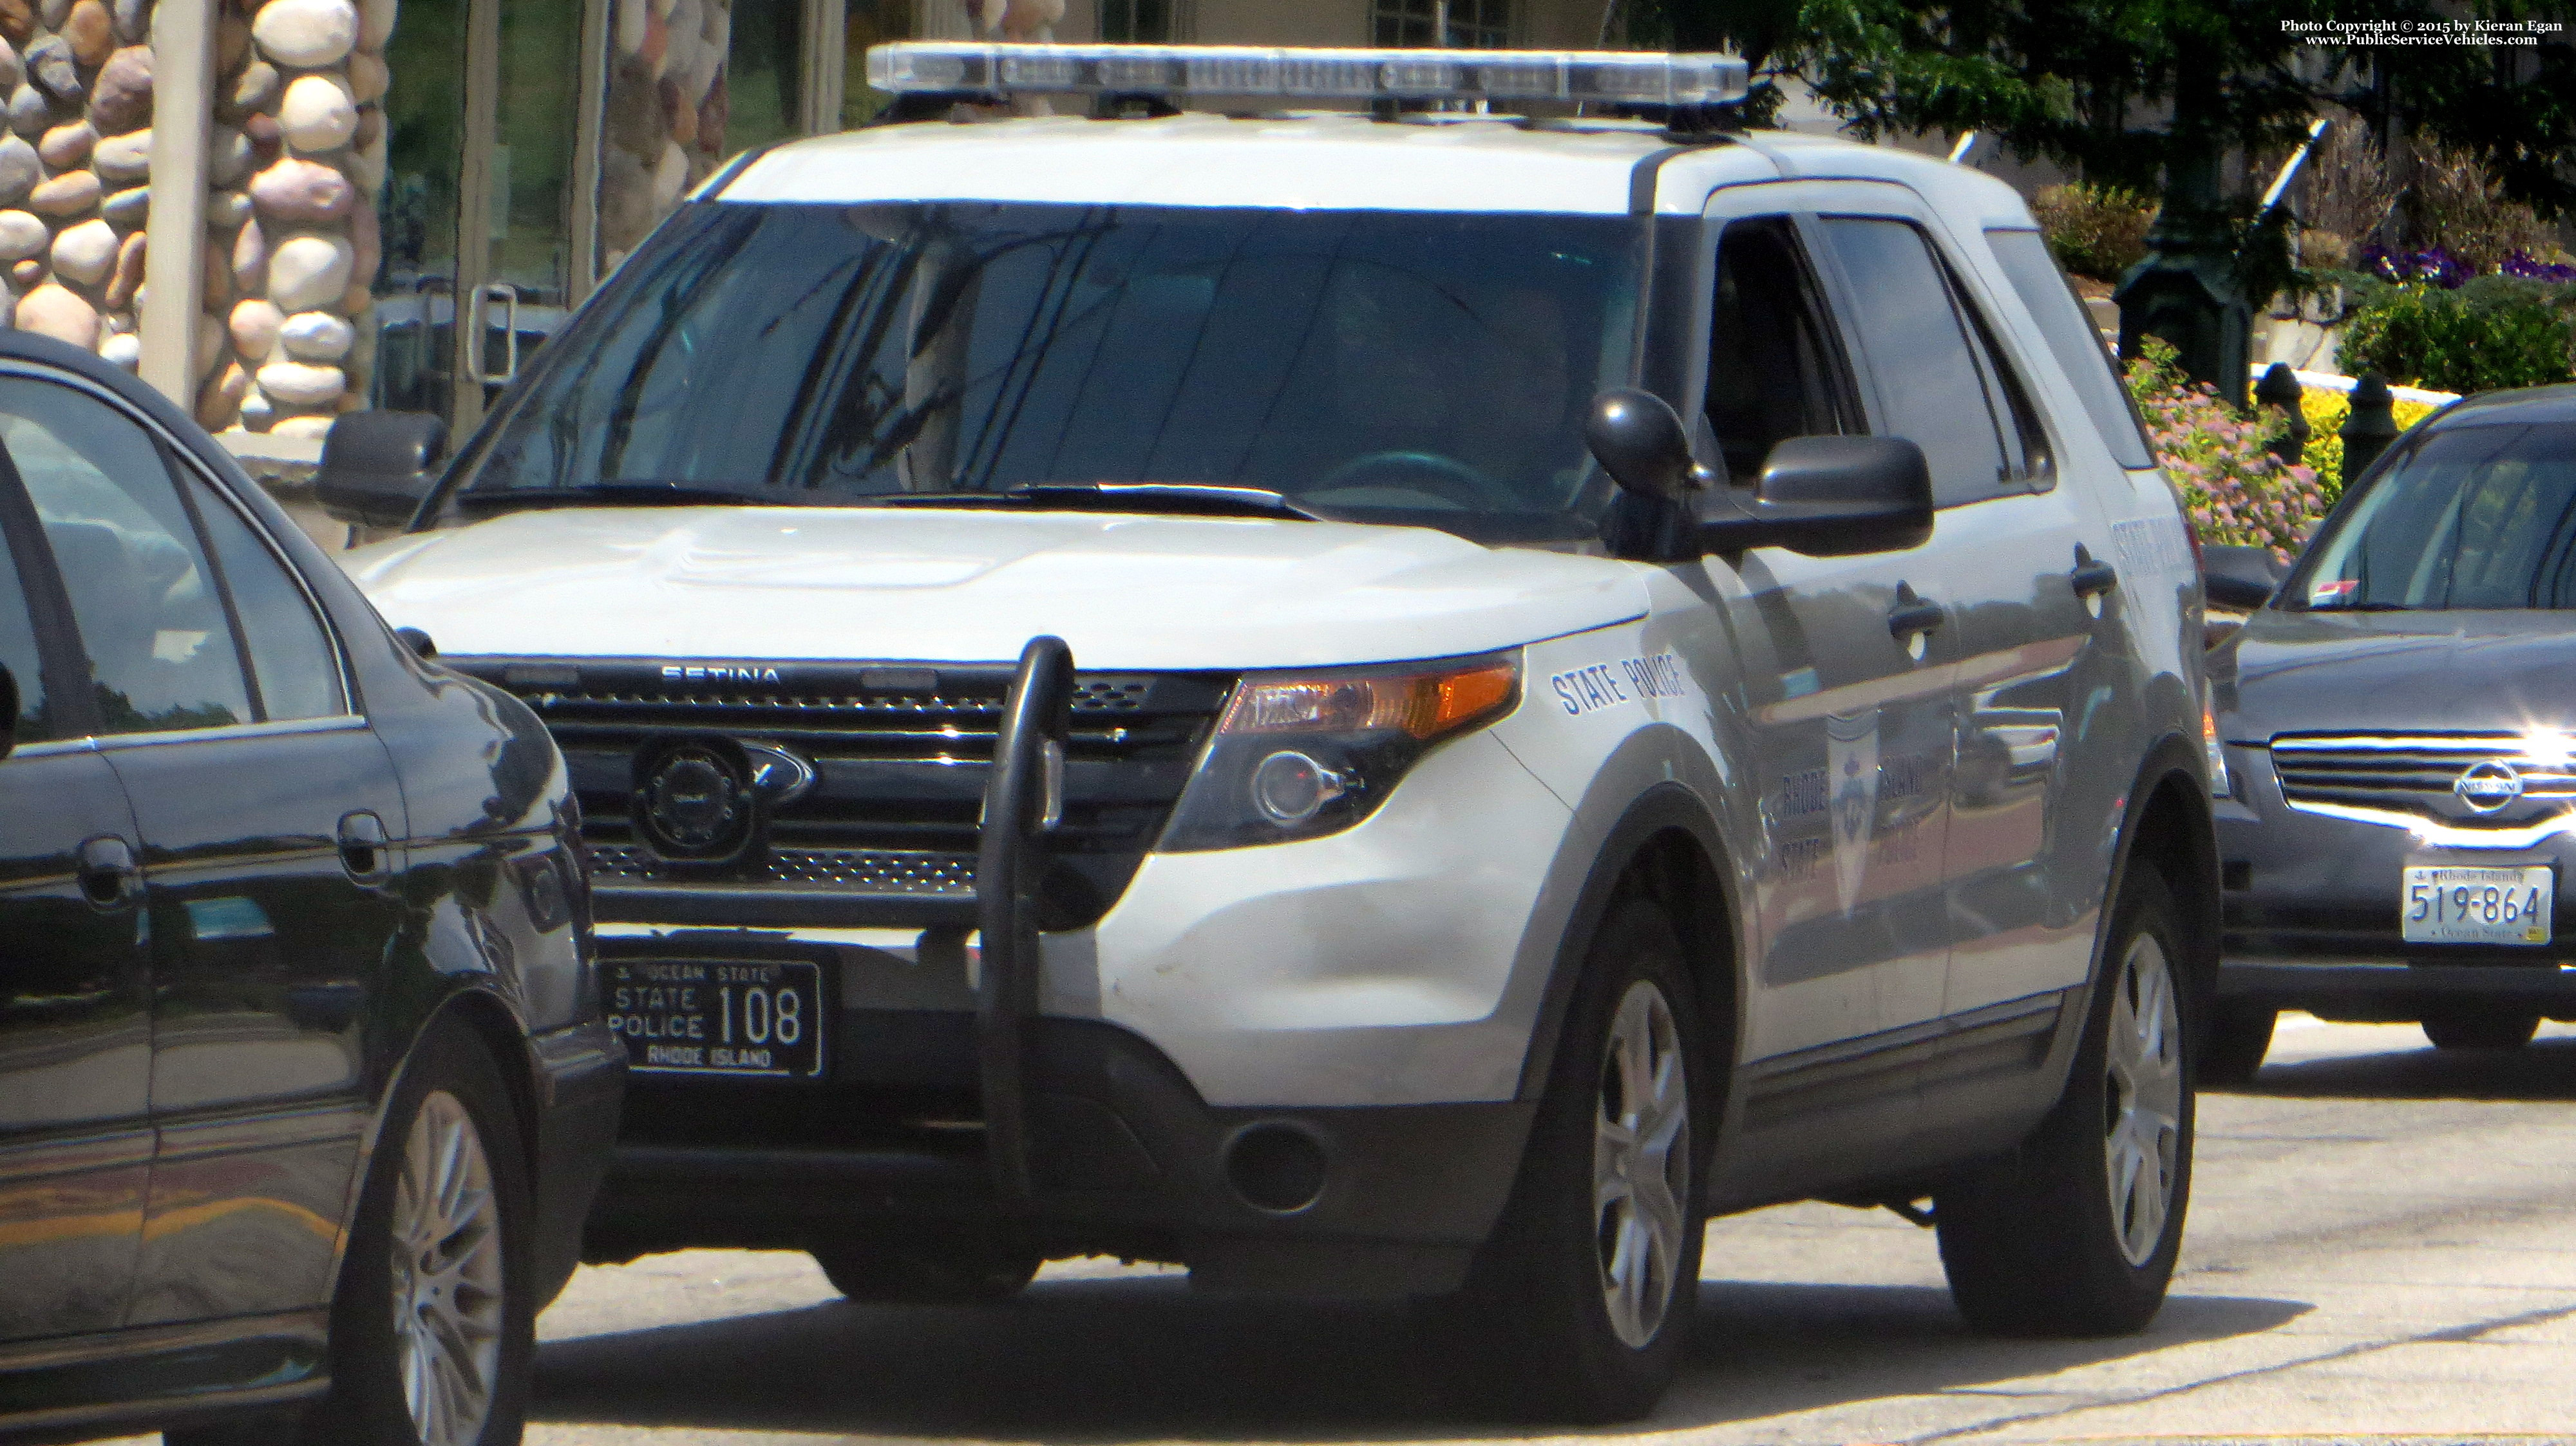 A photo  of Rhode Island State Police
            Cruiser 108, a 2013-2015 Ford Police Interceptor Utility             taken by Kieran Egan